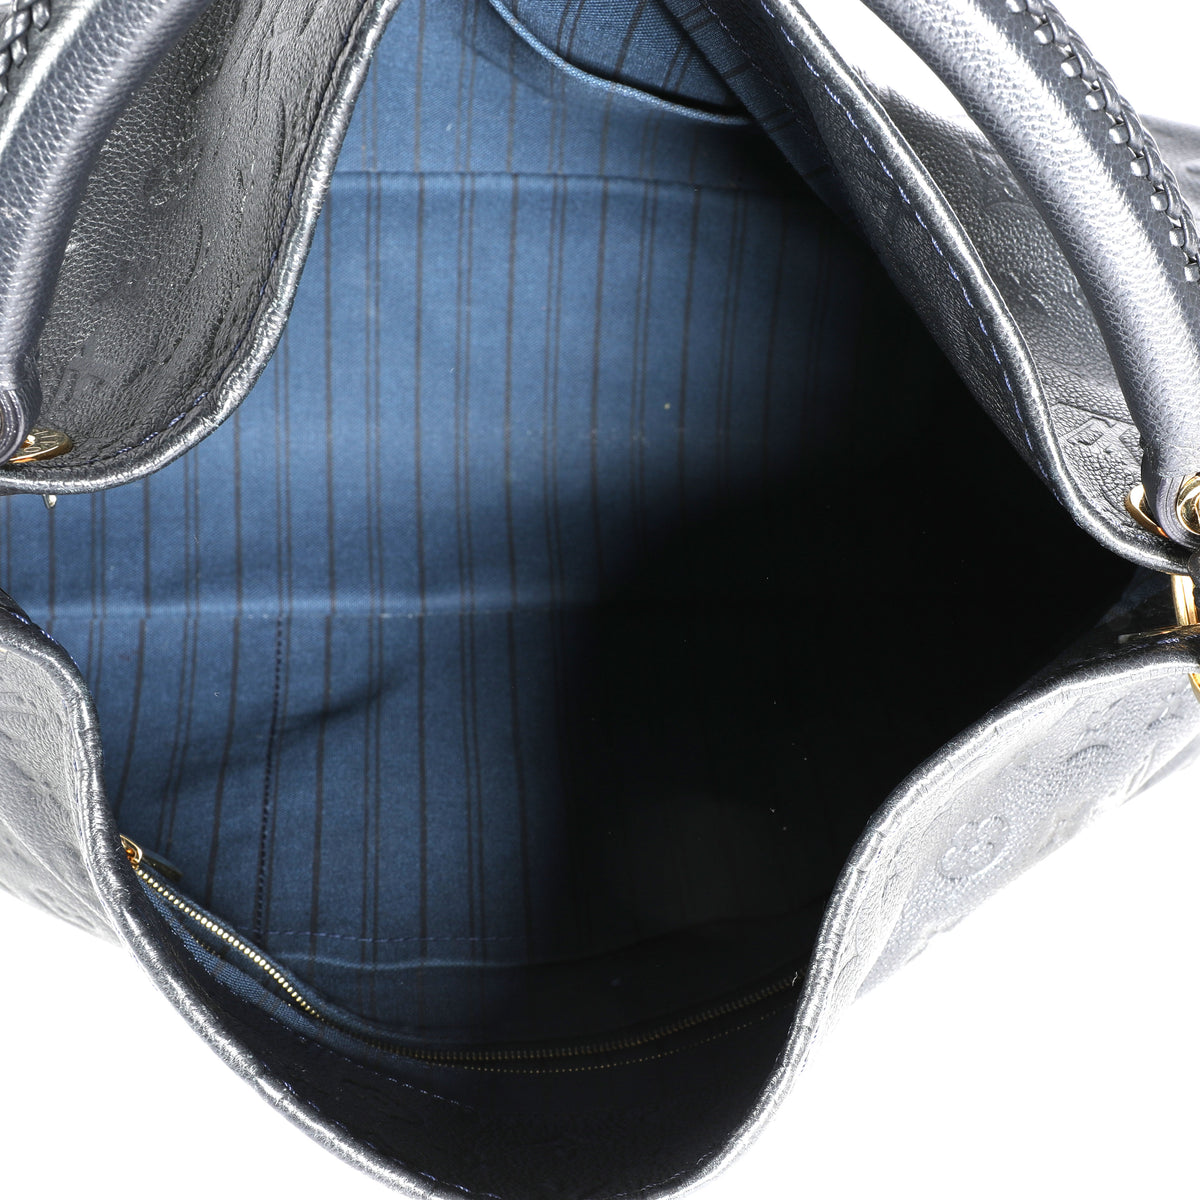 Louis Vuitton Artsy MM Empreinte Leather Top Handle Bag on SALE